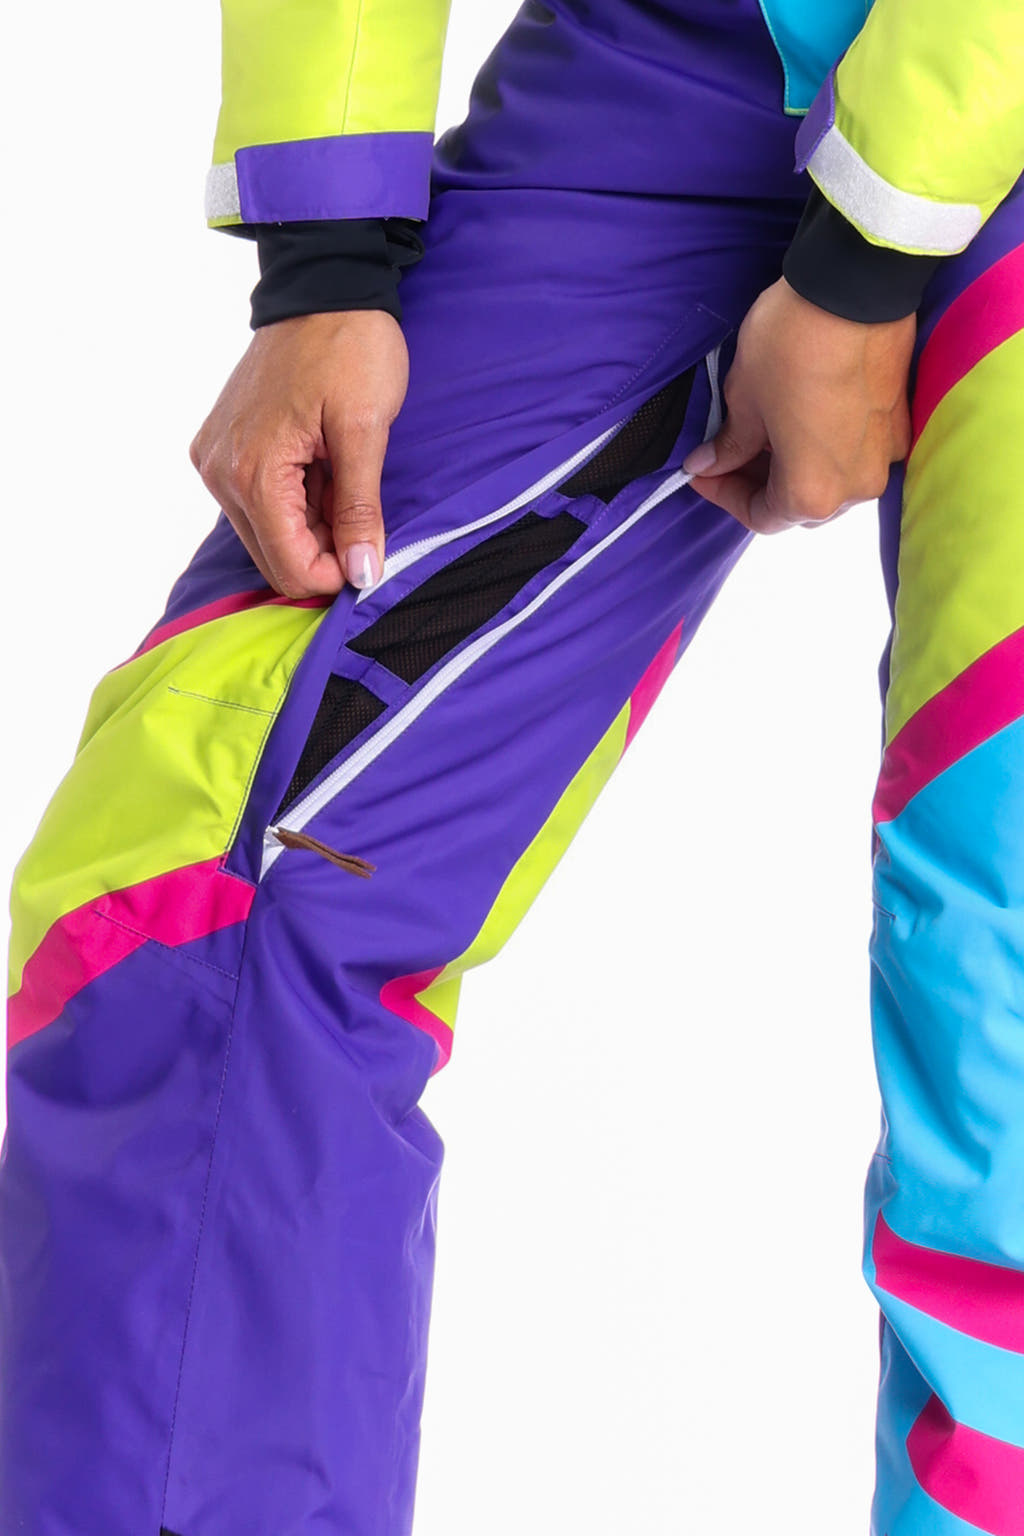 Neon purple ski suit